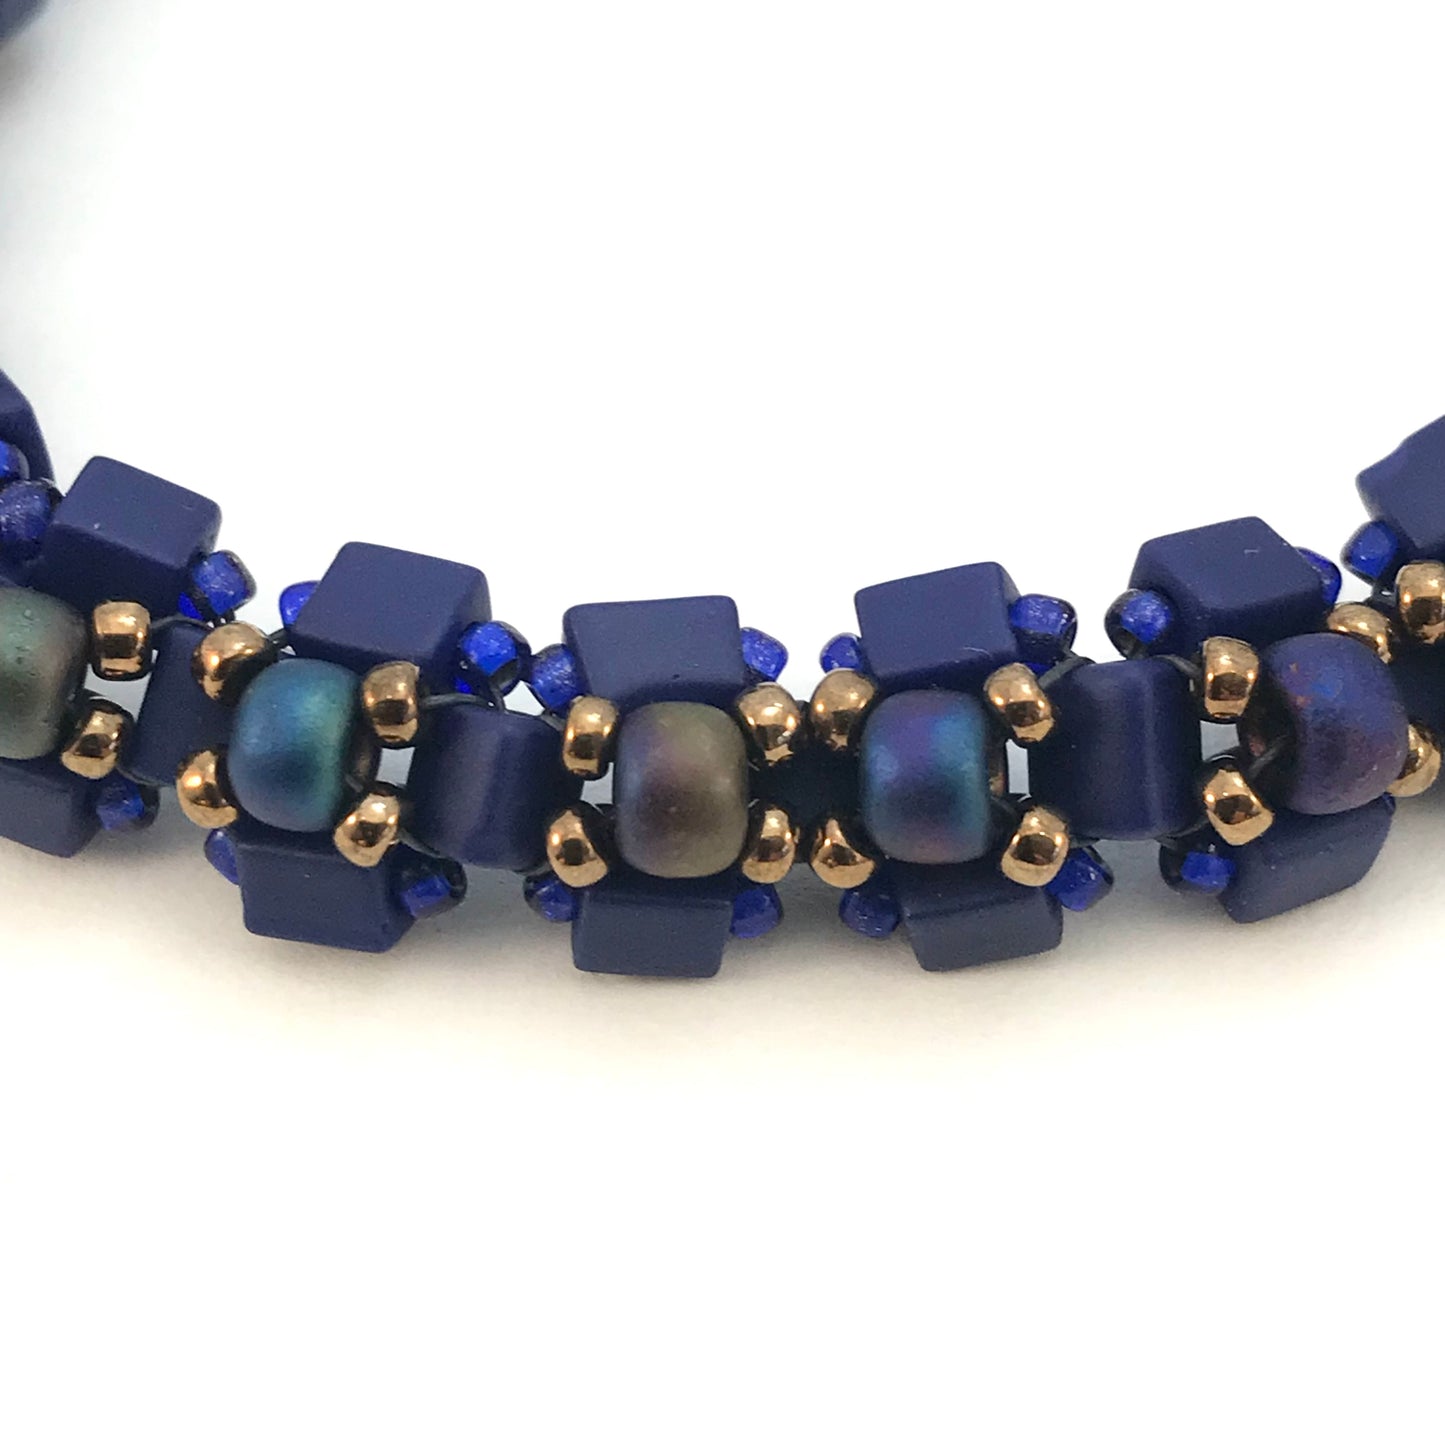 Midnight Blue with Matte Rainbow Glass Art Bead  Bracelet